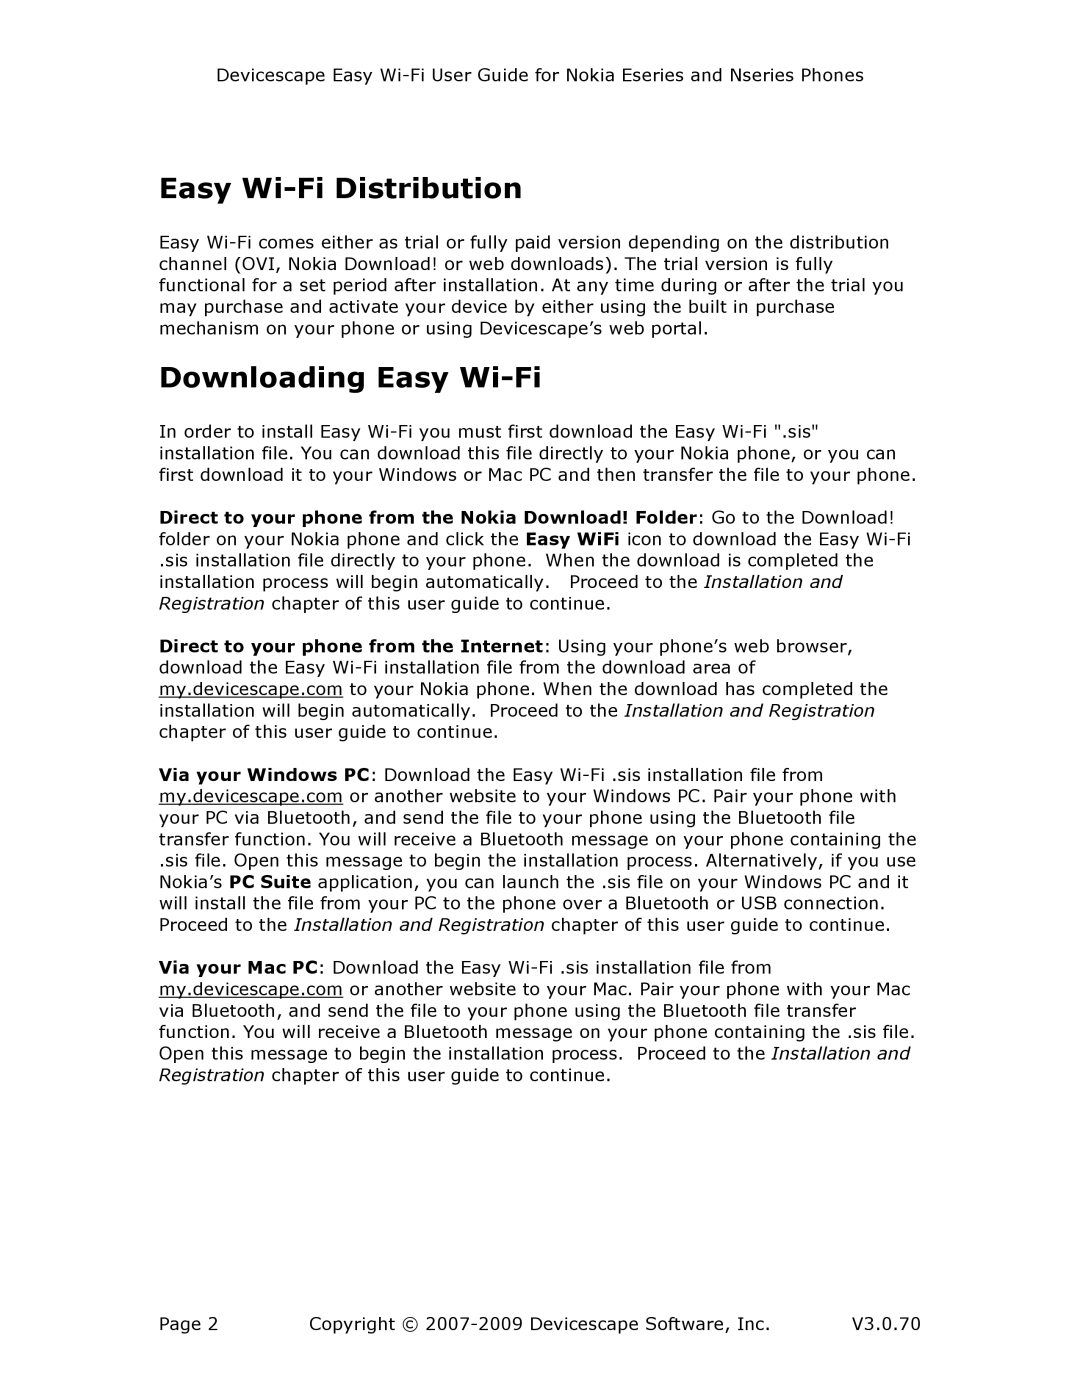 Nokia V3.0.70 manual Easy Wi-Fi Distribution, Downloading Easy Wi-Fi 